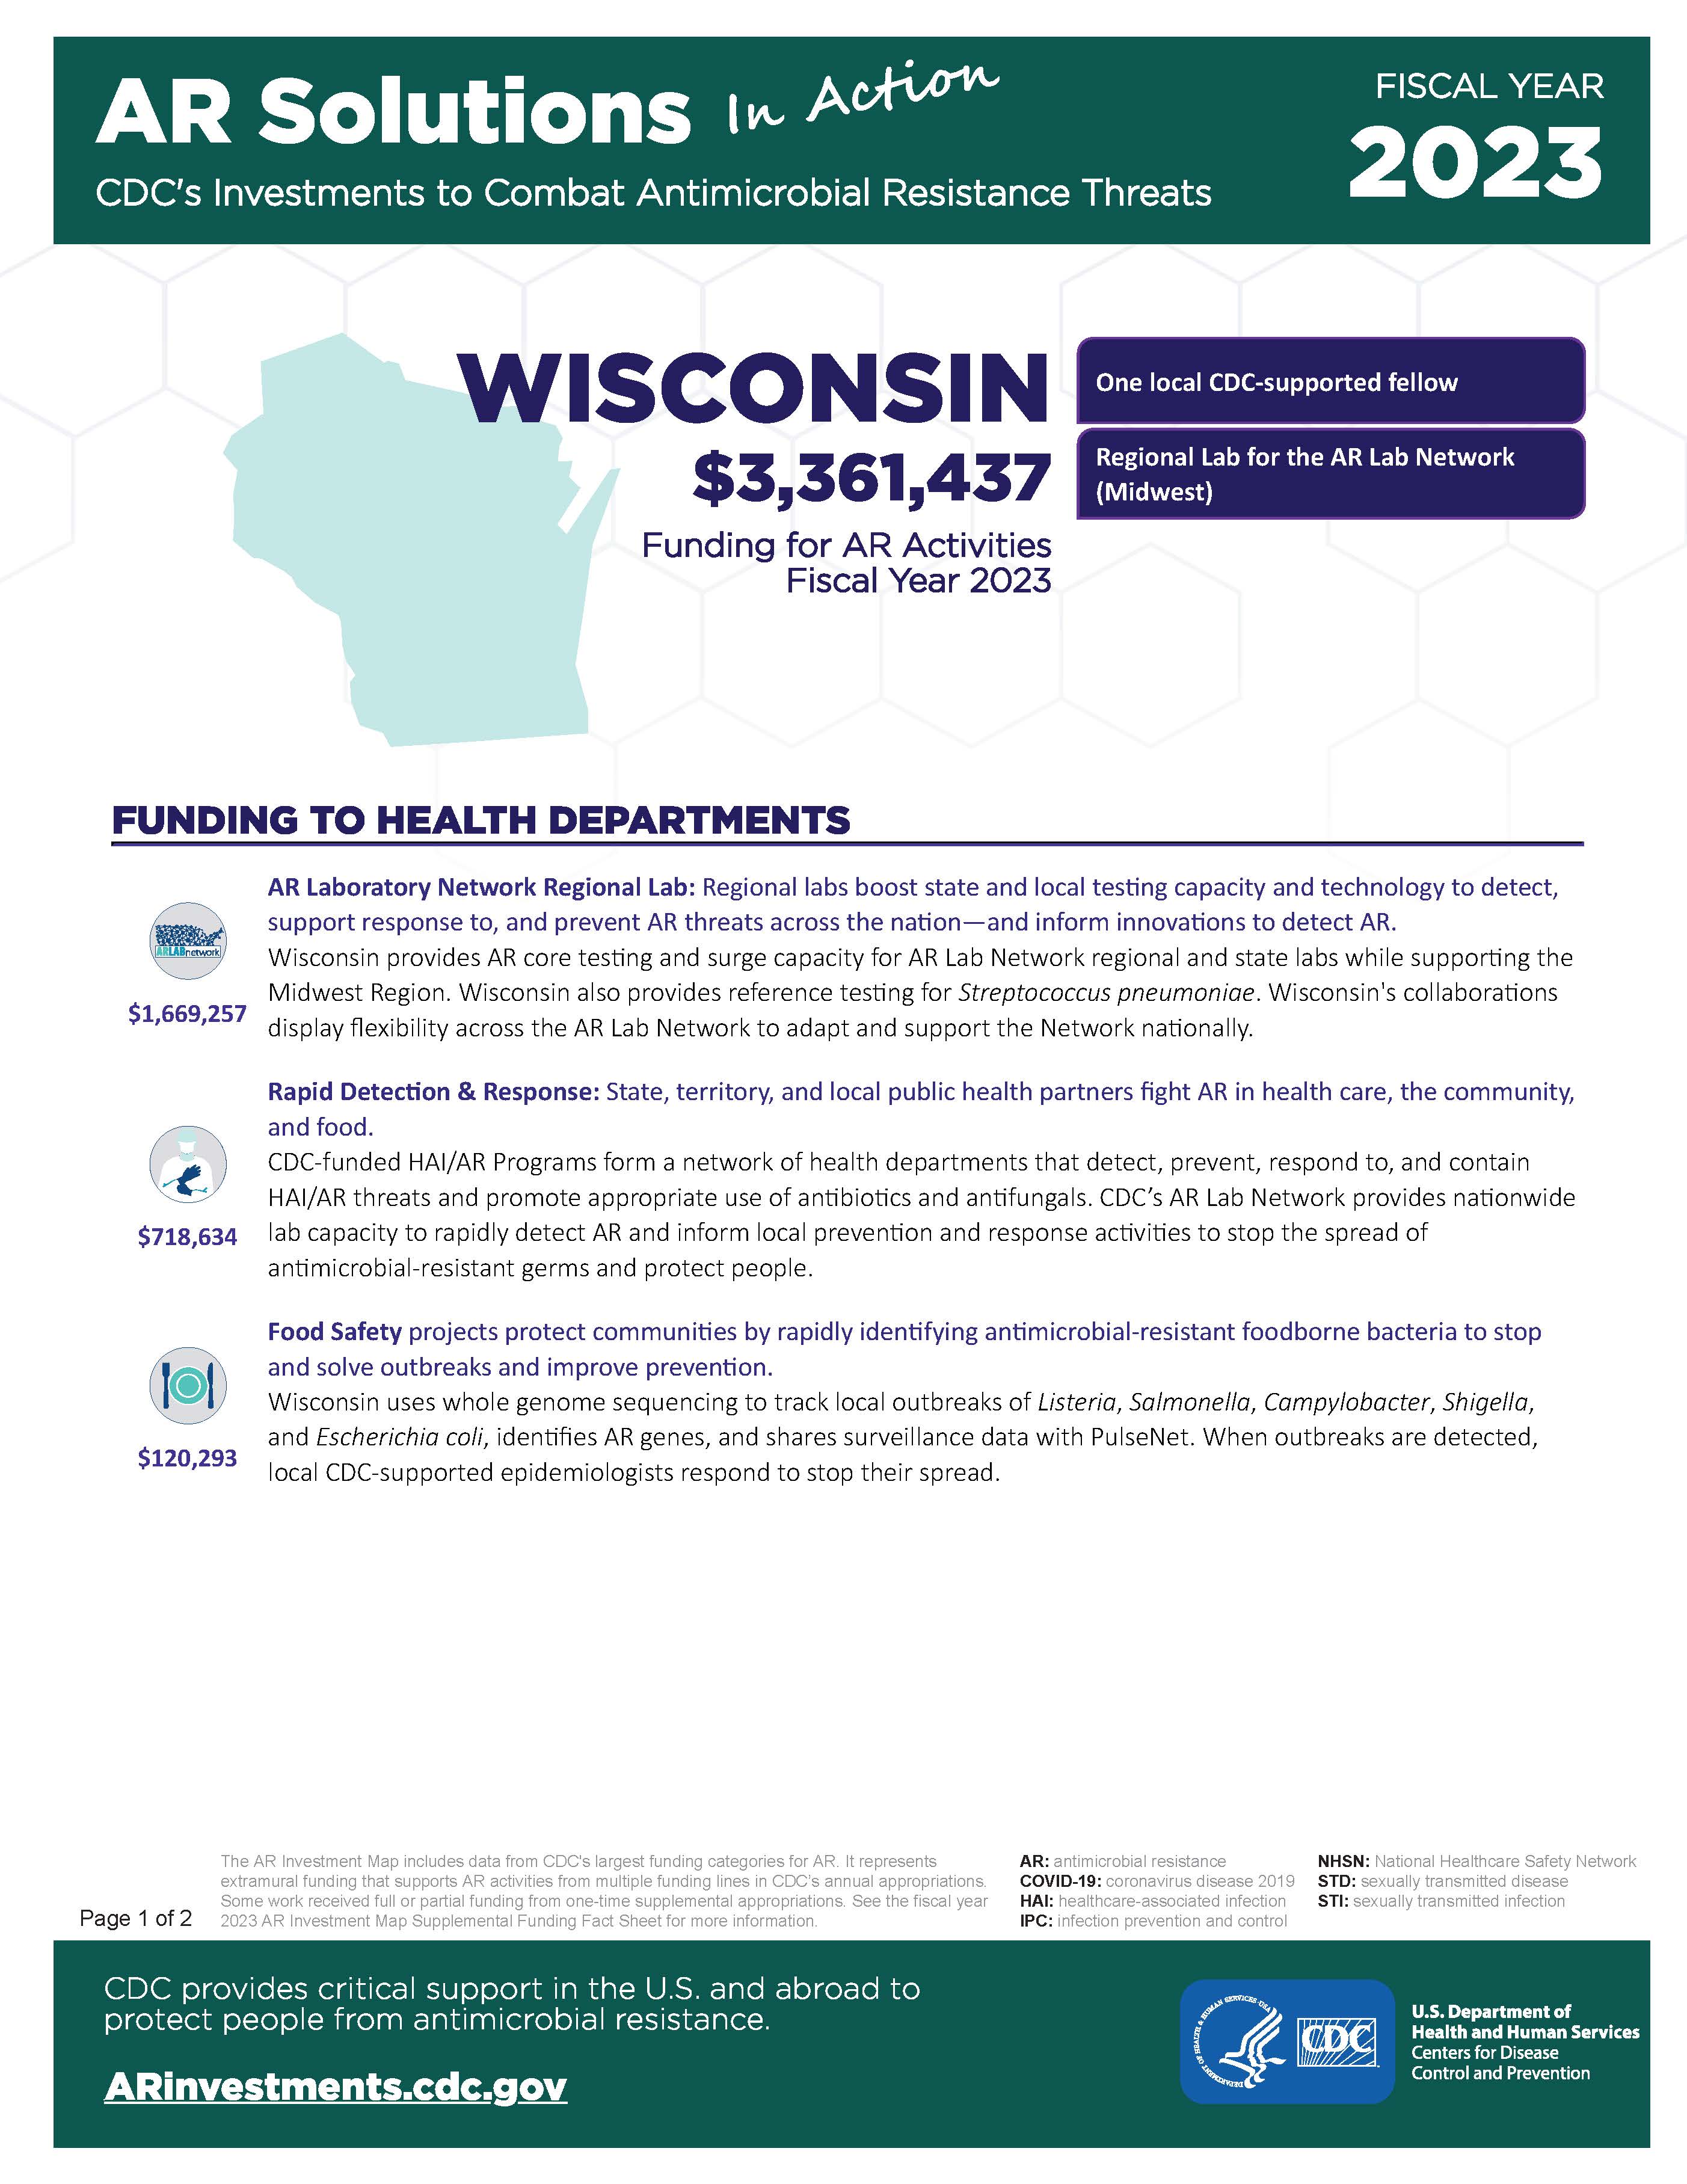 View Factsheet for Wisconsin